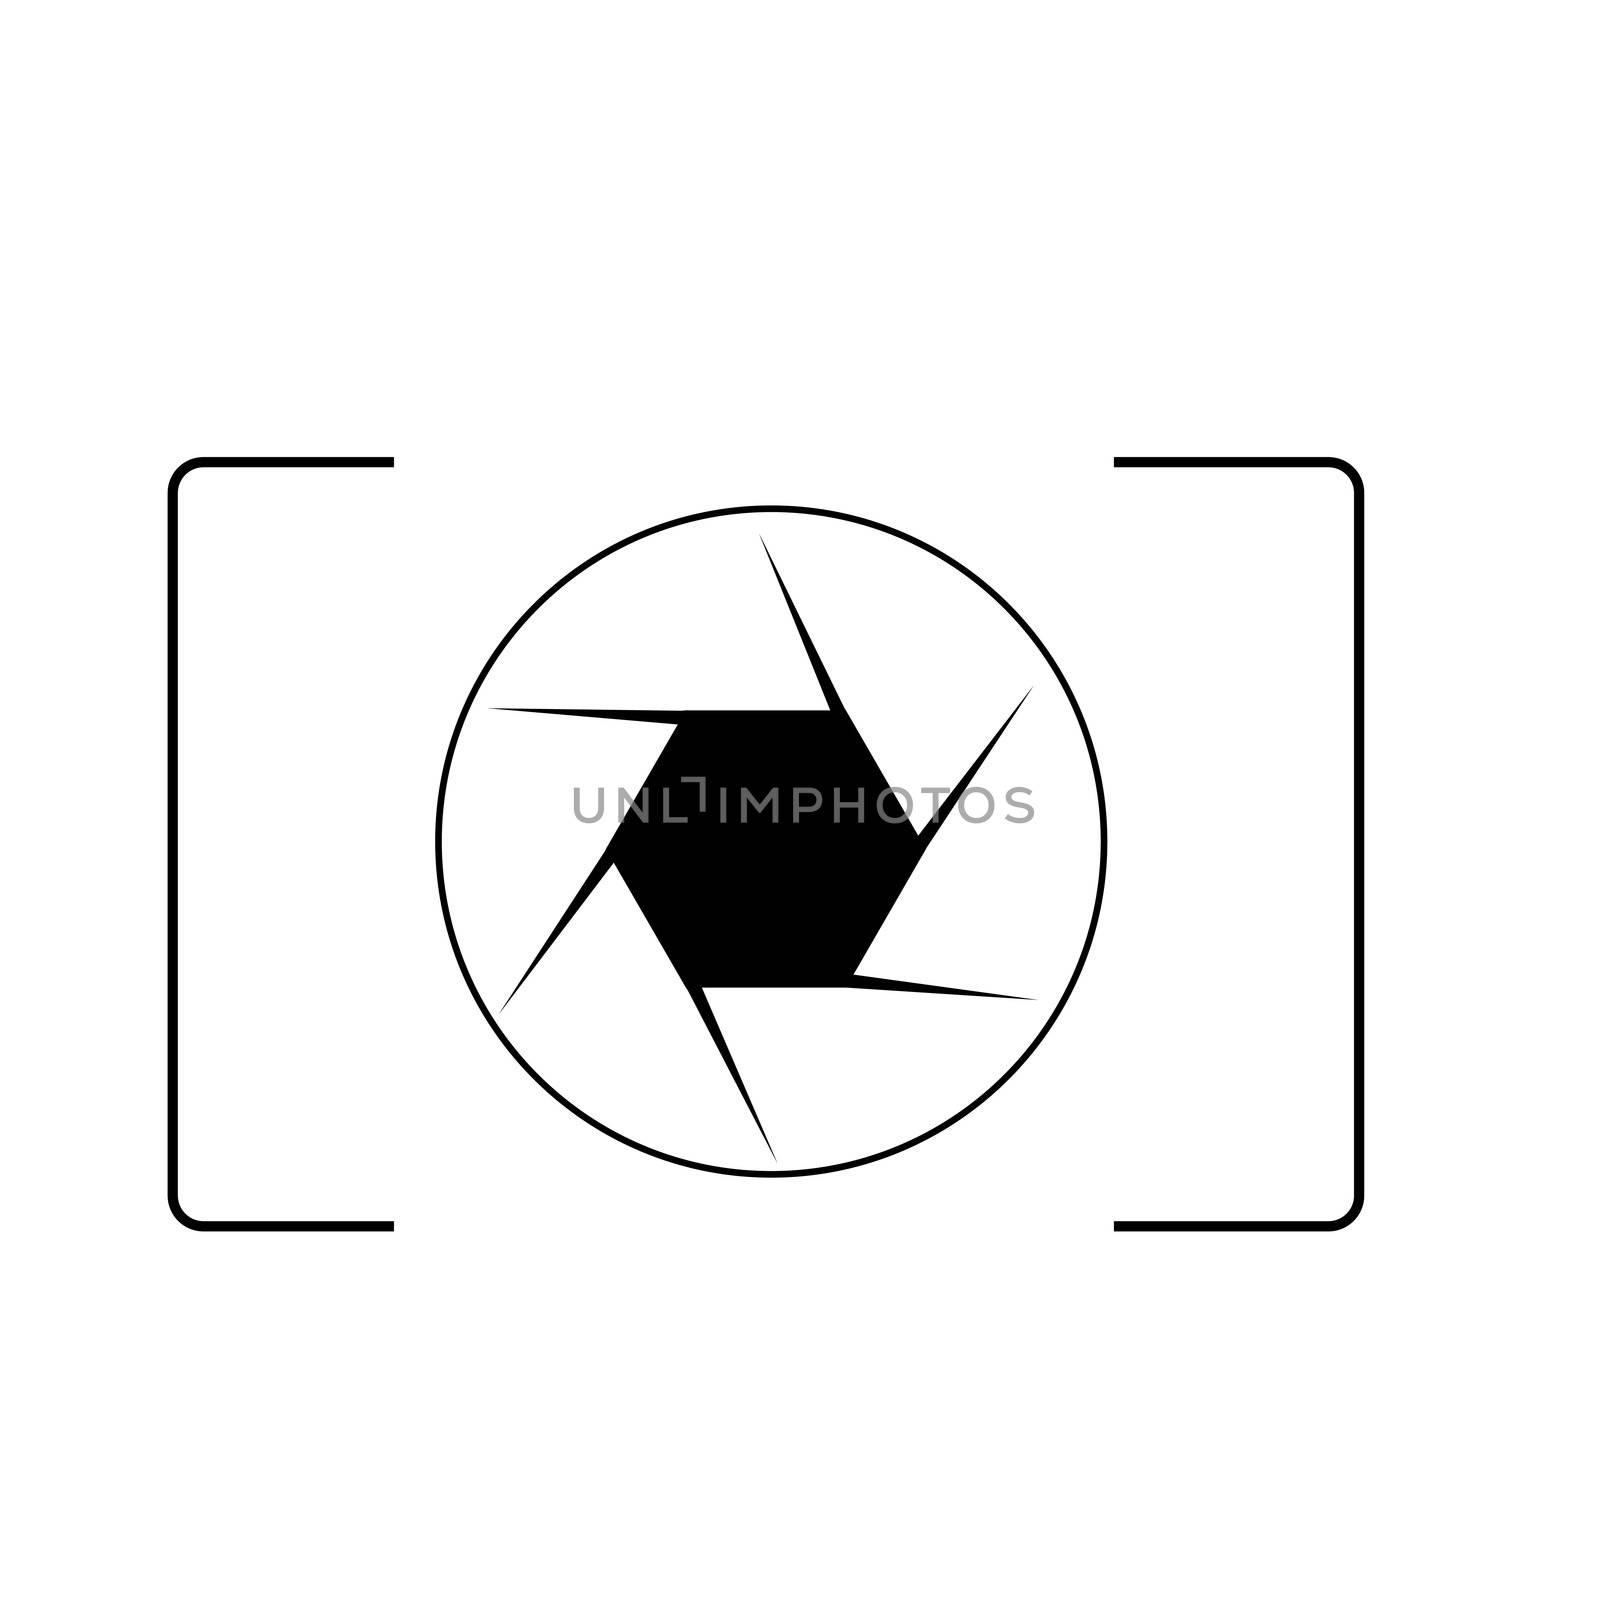 Photography Logo by shawlinmohd